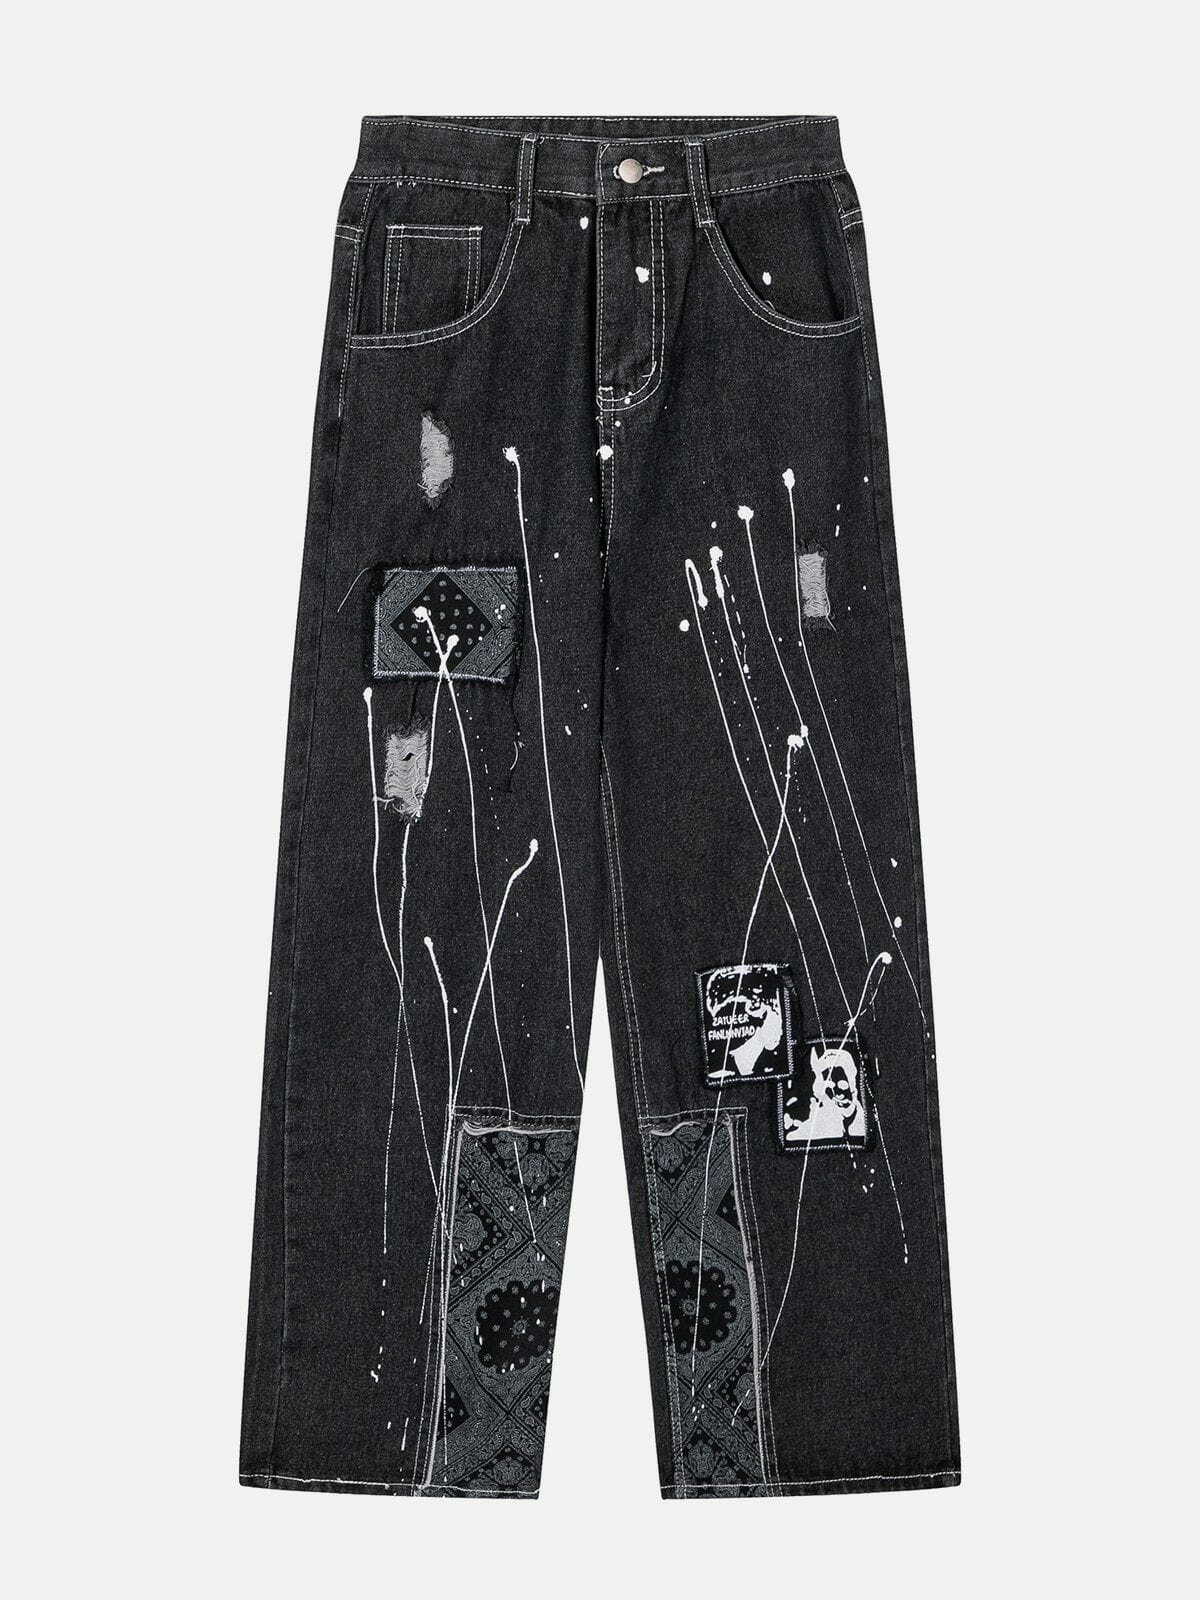 ink jet patchwork jeans edgy & retro streetwear 1372